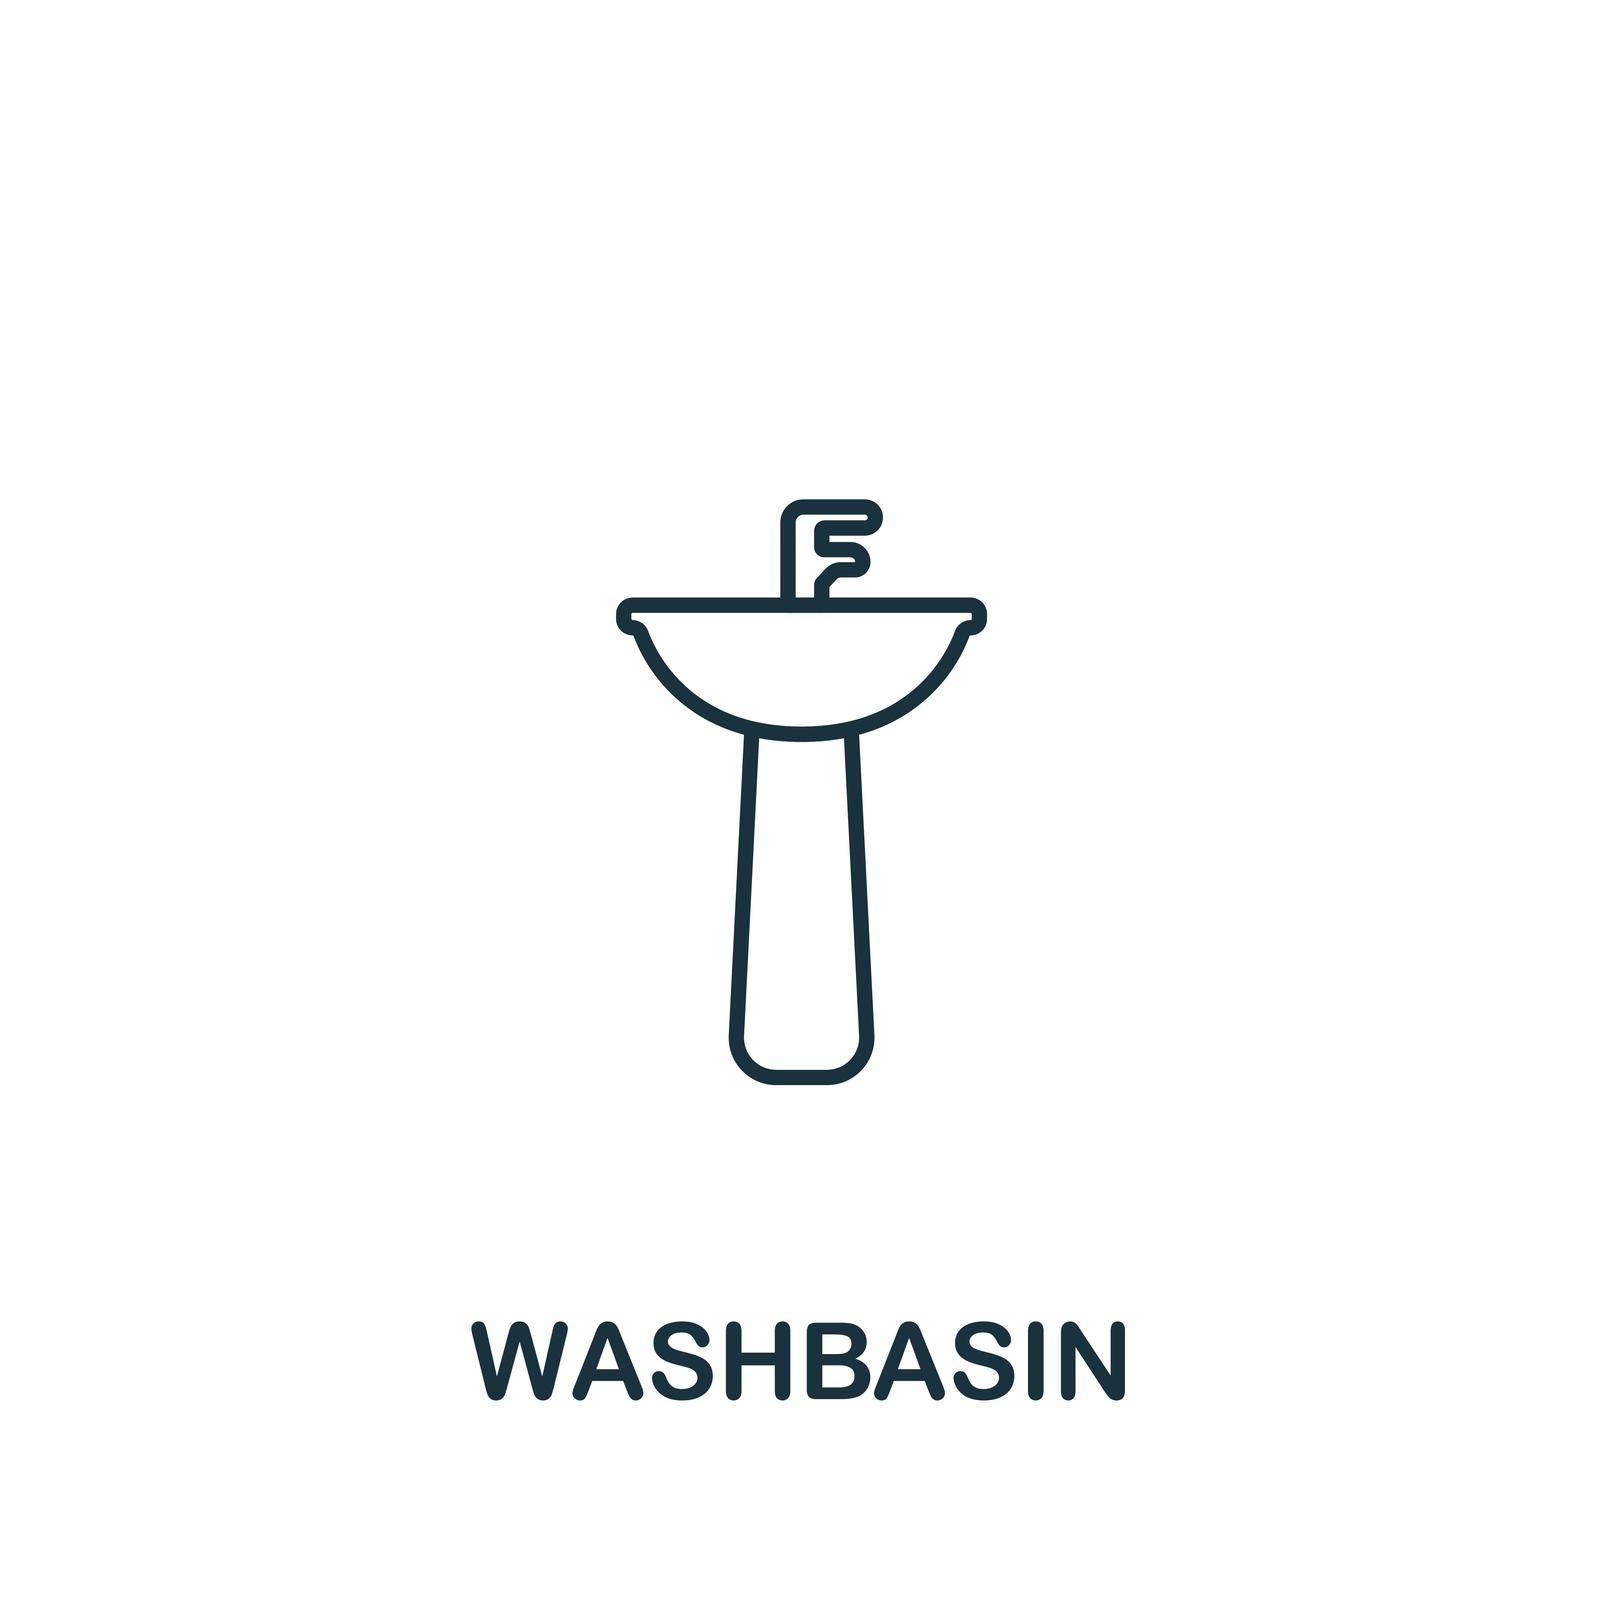 Washbasin icon. Simple line element washbasin symbol for templates, web design and infographics.